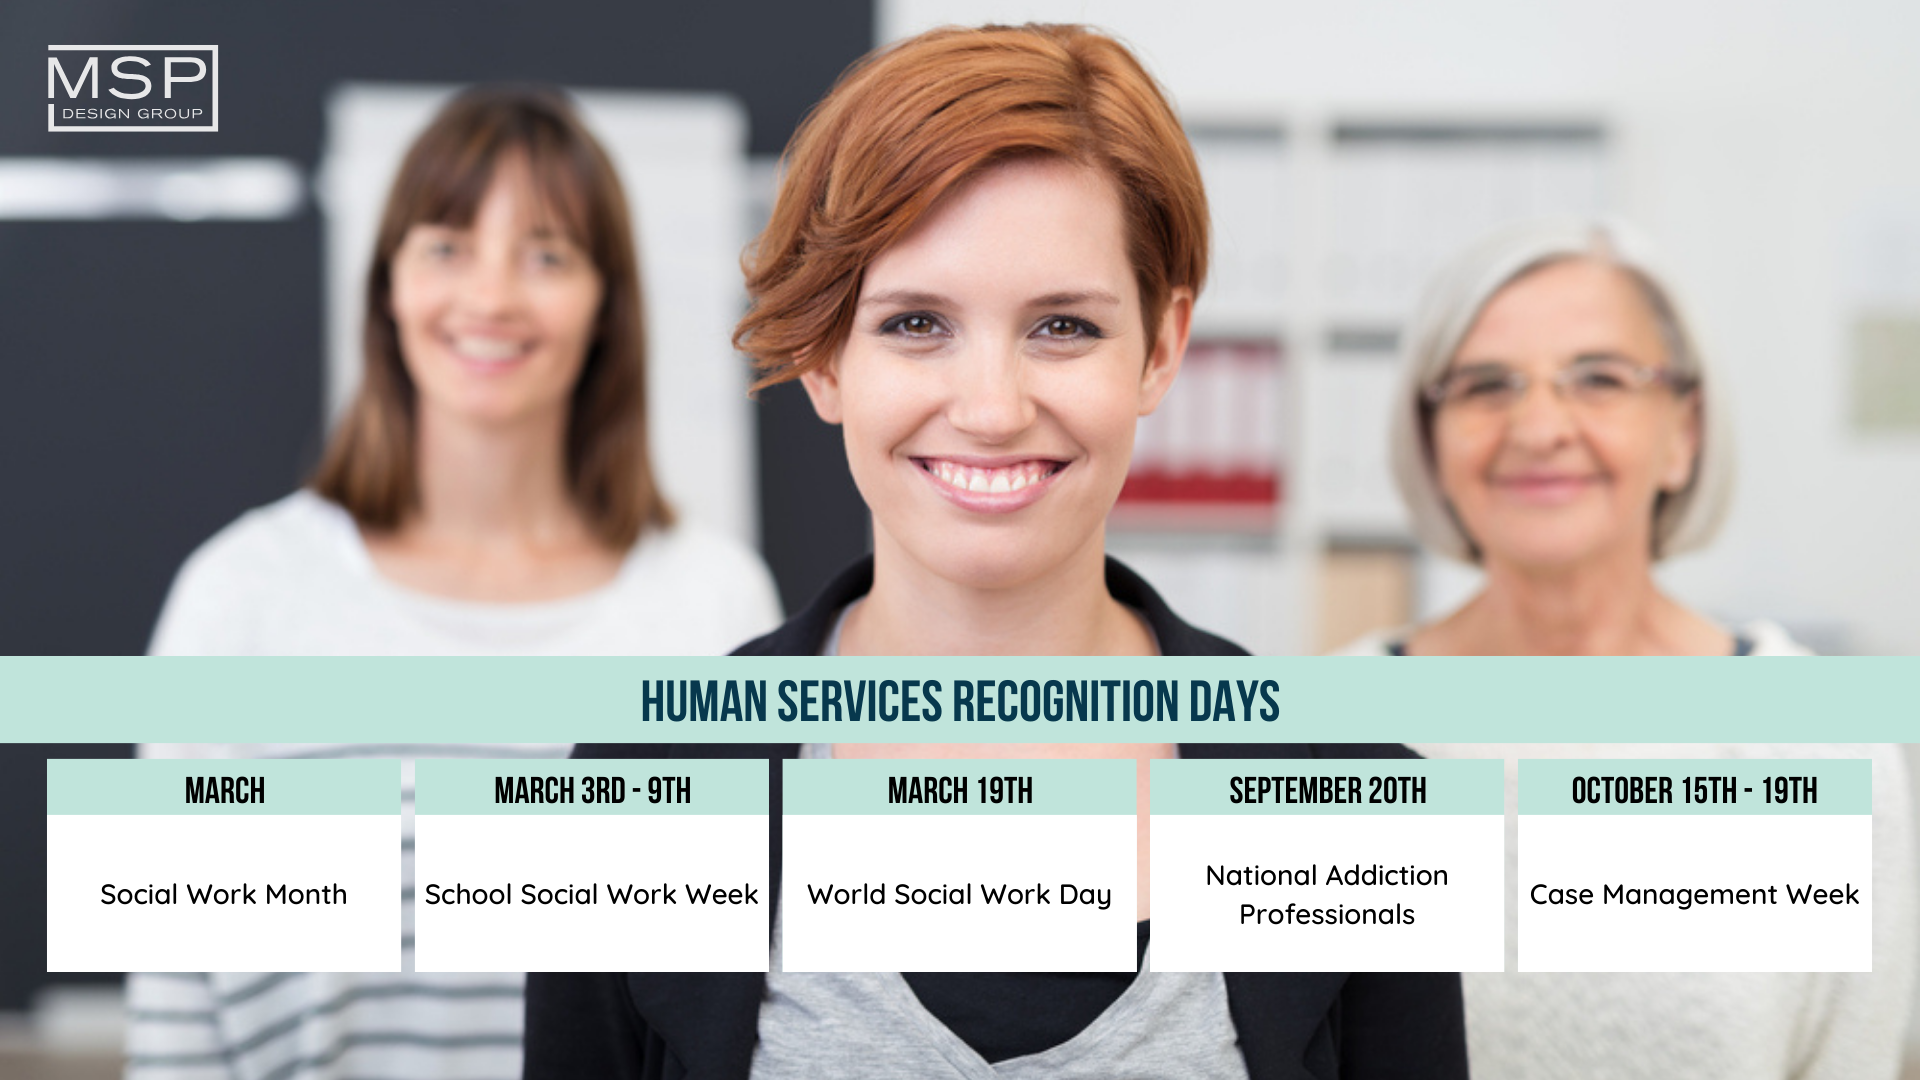 Employee Appreciation Calendar - Human Services